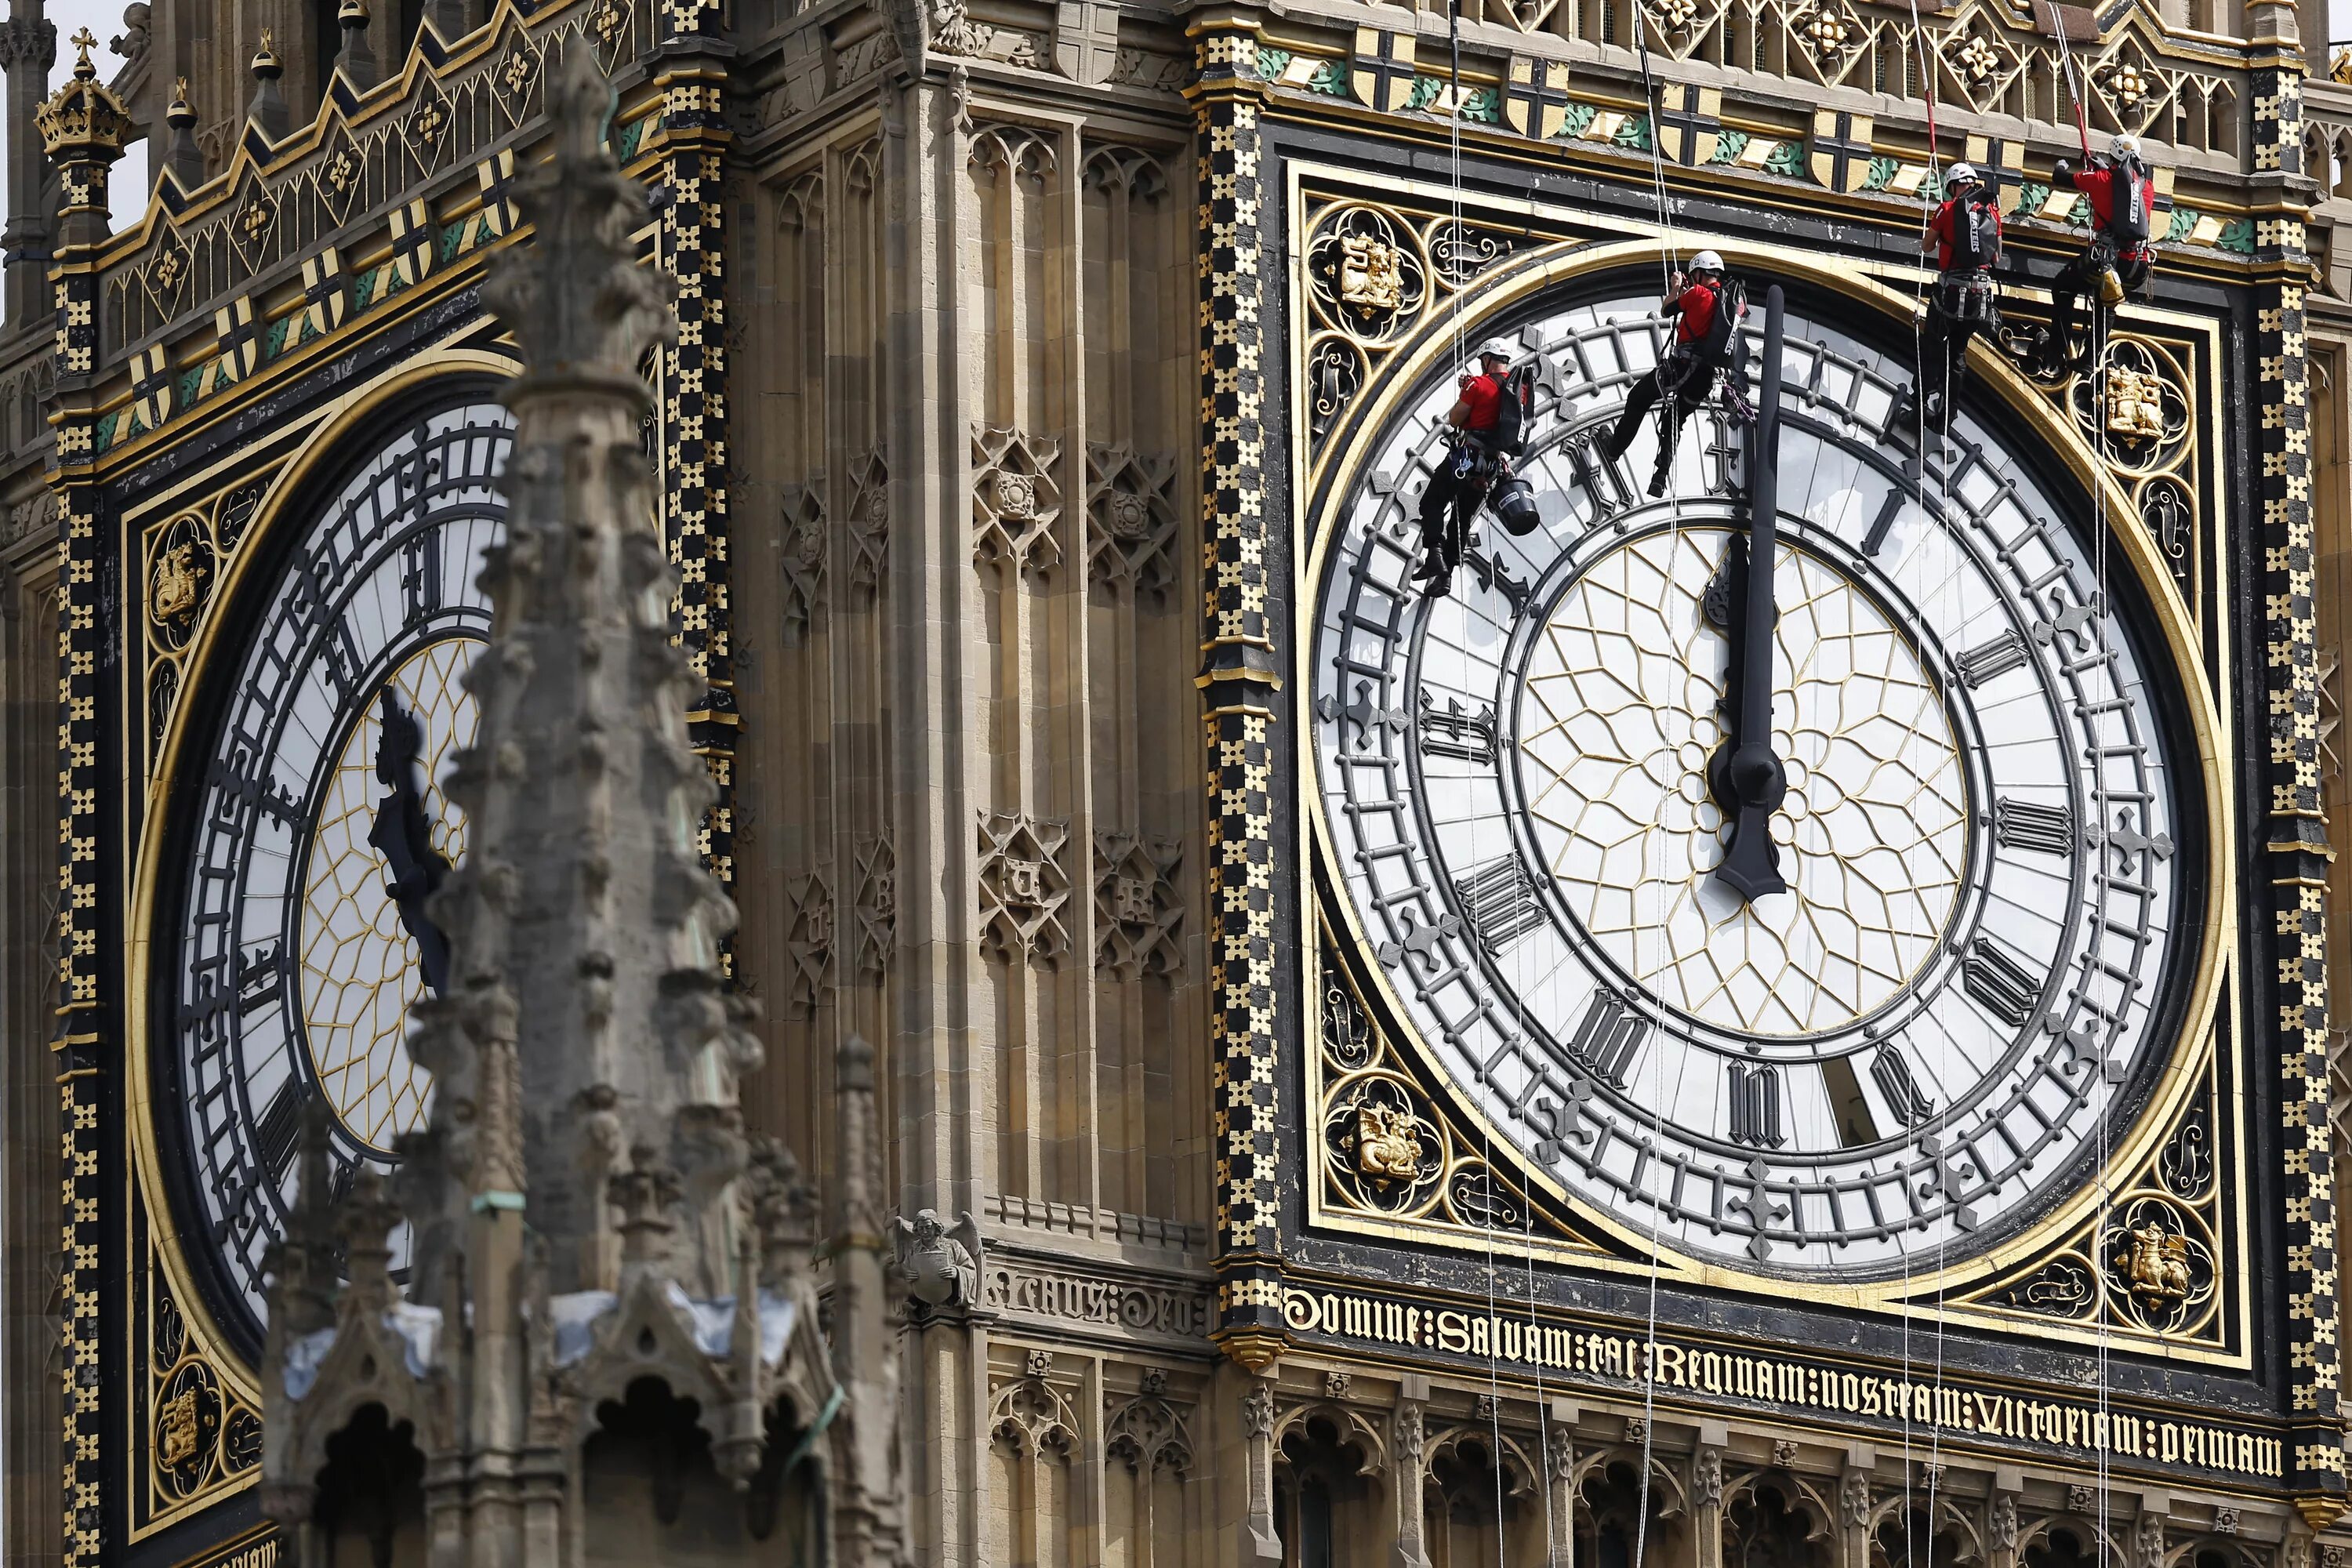 Самых больших часов. Башенные часы Биг Бен. Часовая башня Вестминстерского дворца. Часы на башне Биг Бен. Биг Бен 1859.